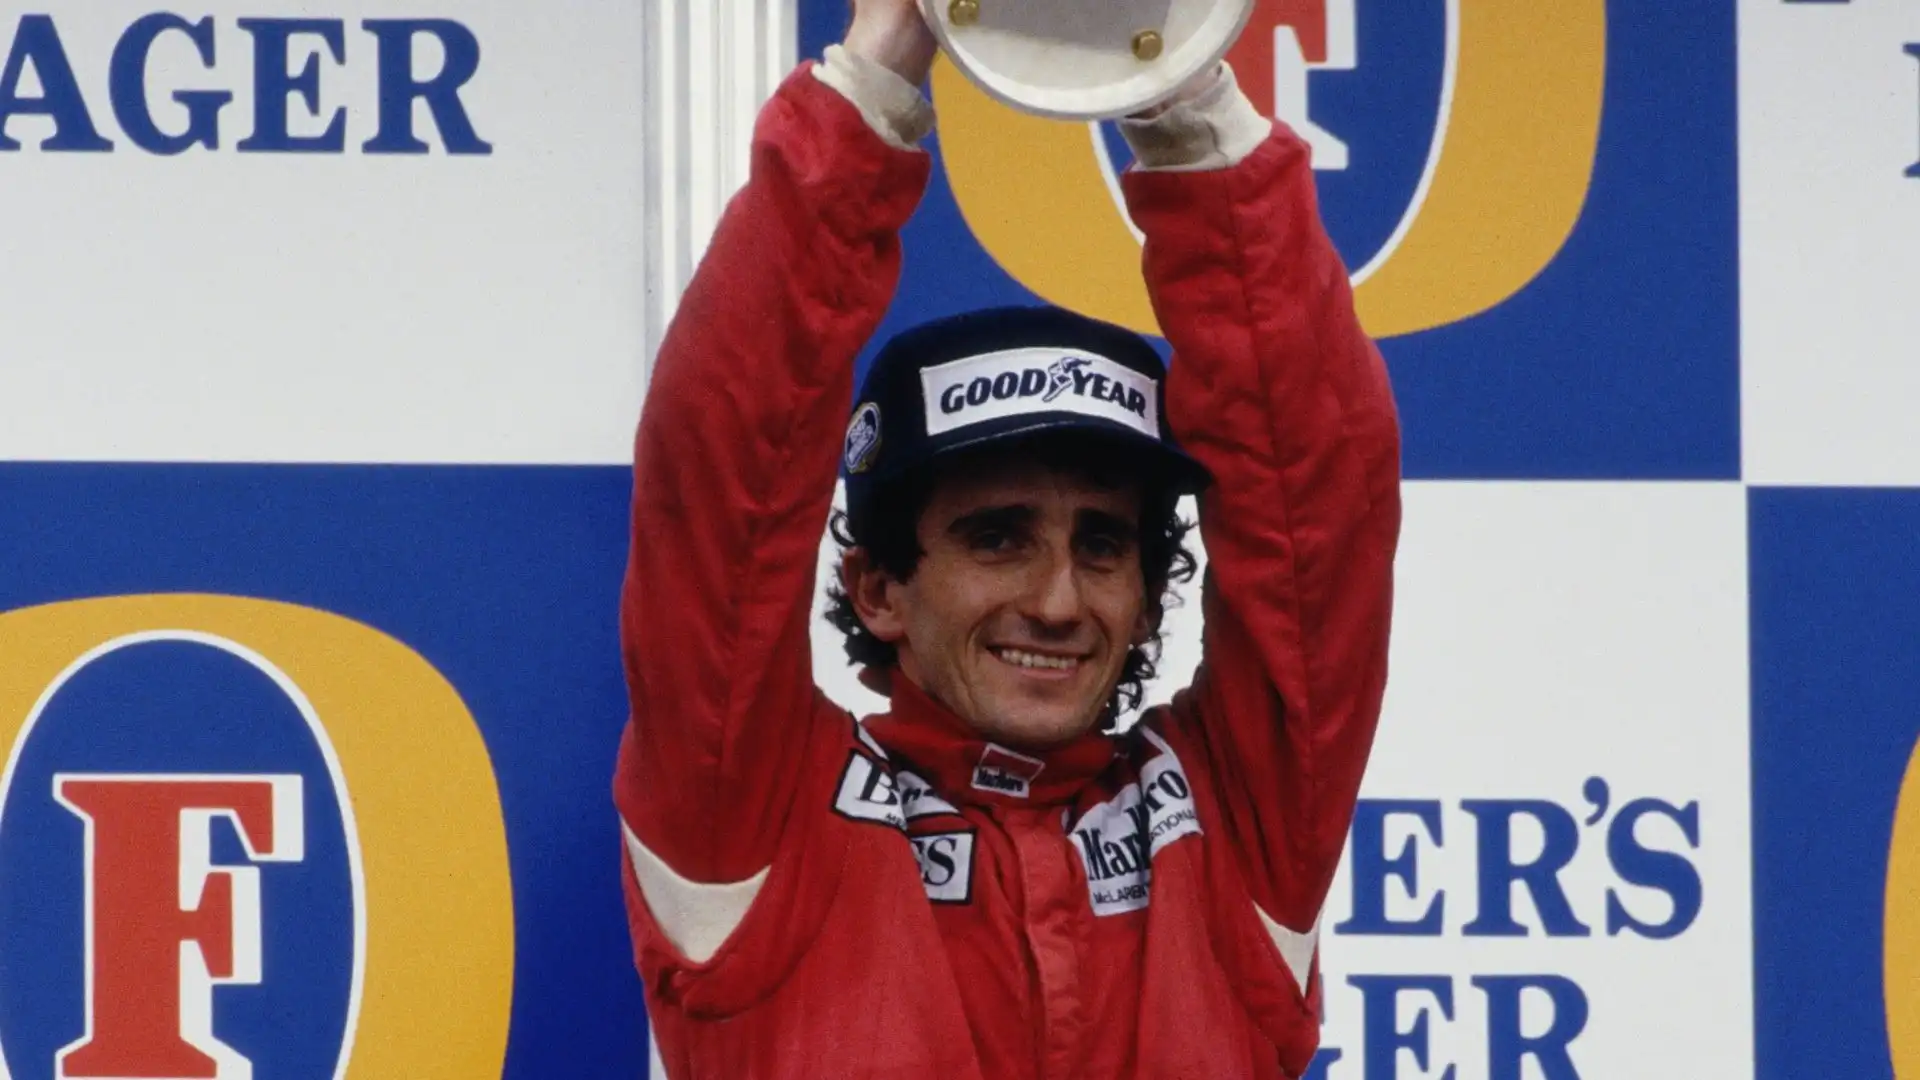 5- Alain Prost